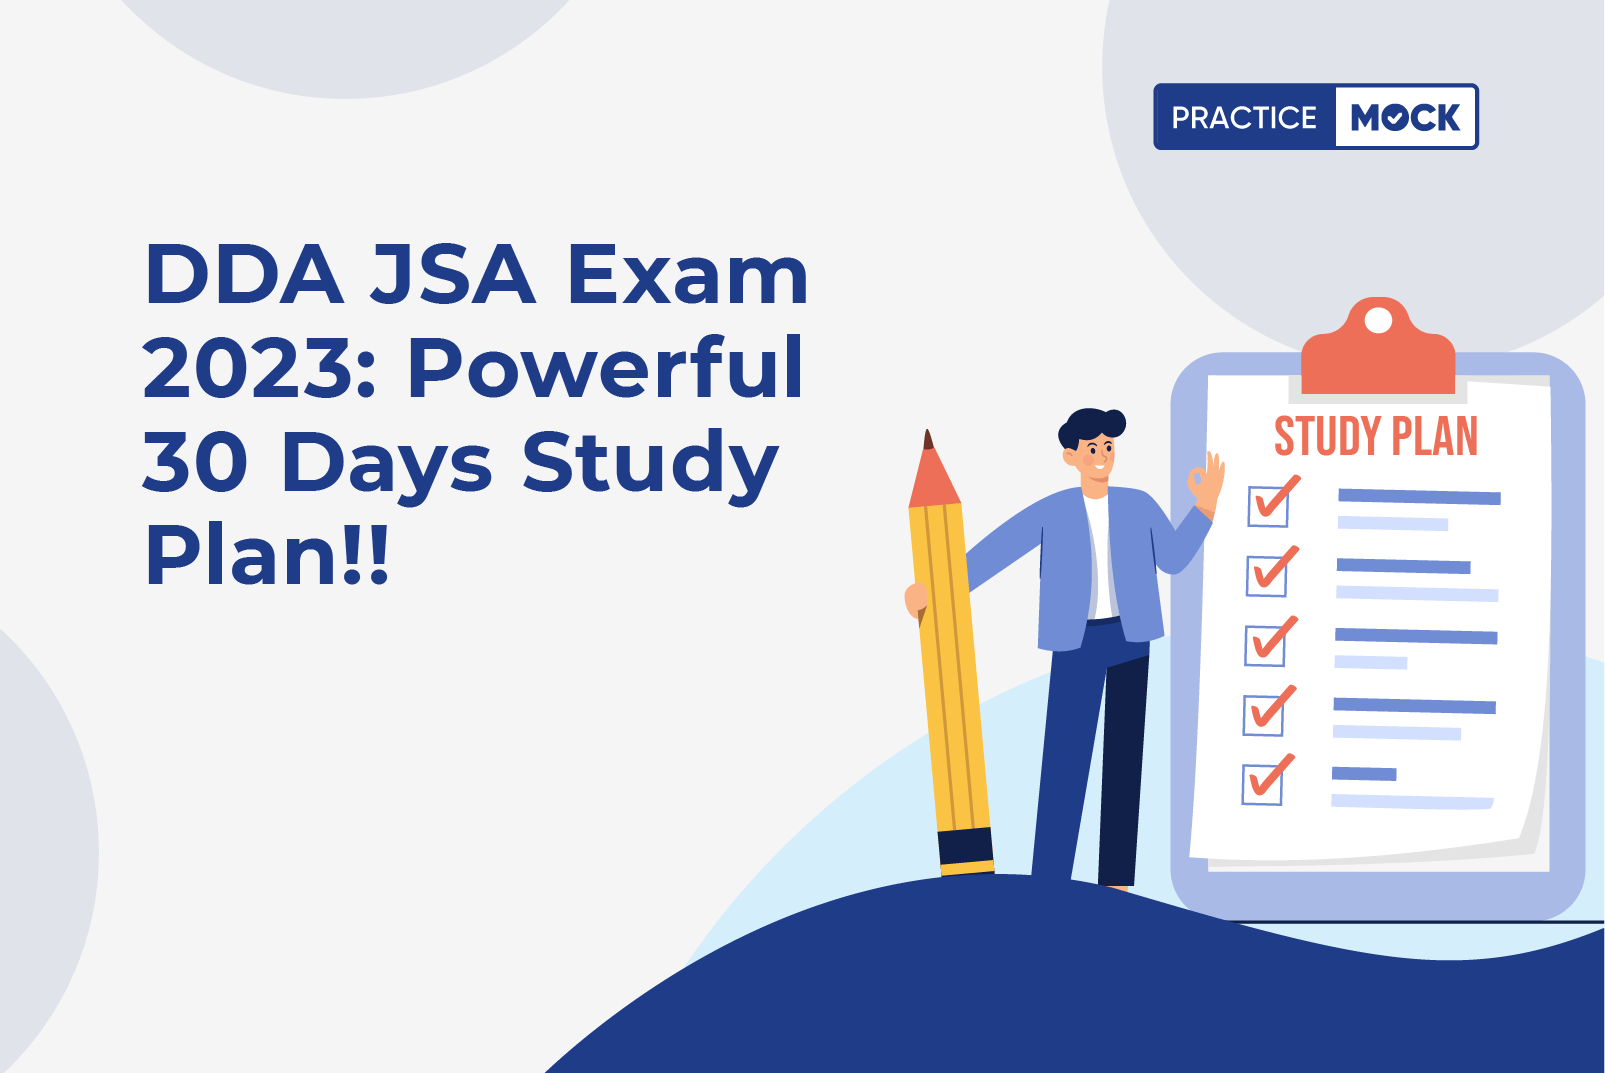 DDA JSA Exam 2023 Powerful 30 Days Study Plan!!